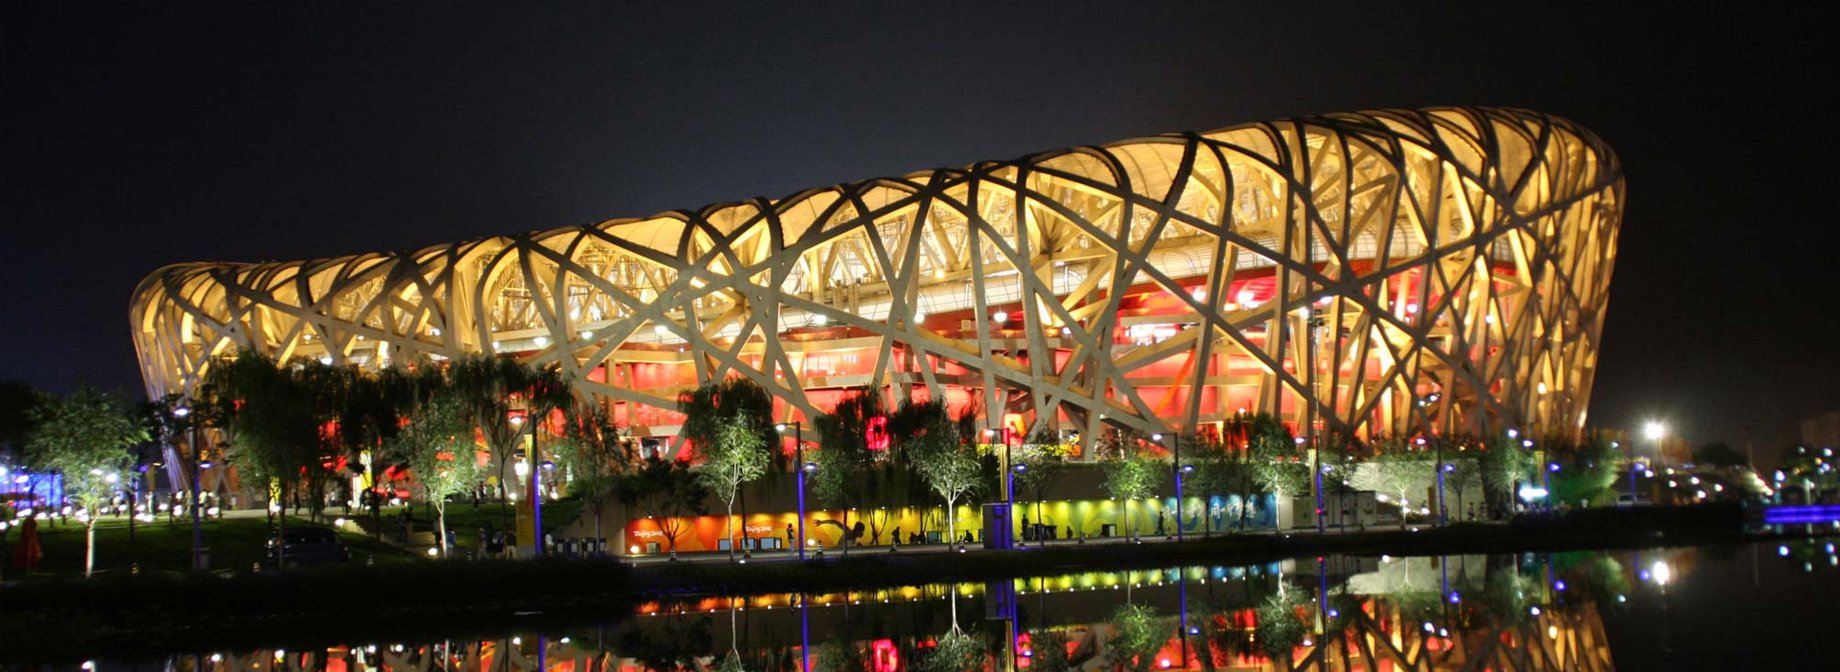 Chinese National Stadium (Birds Nest)